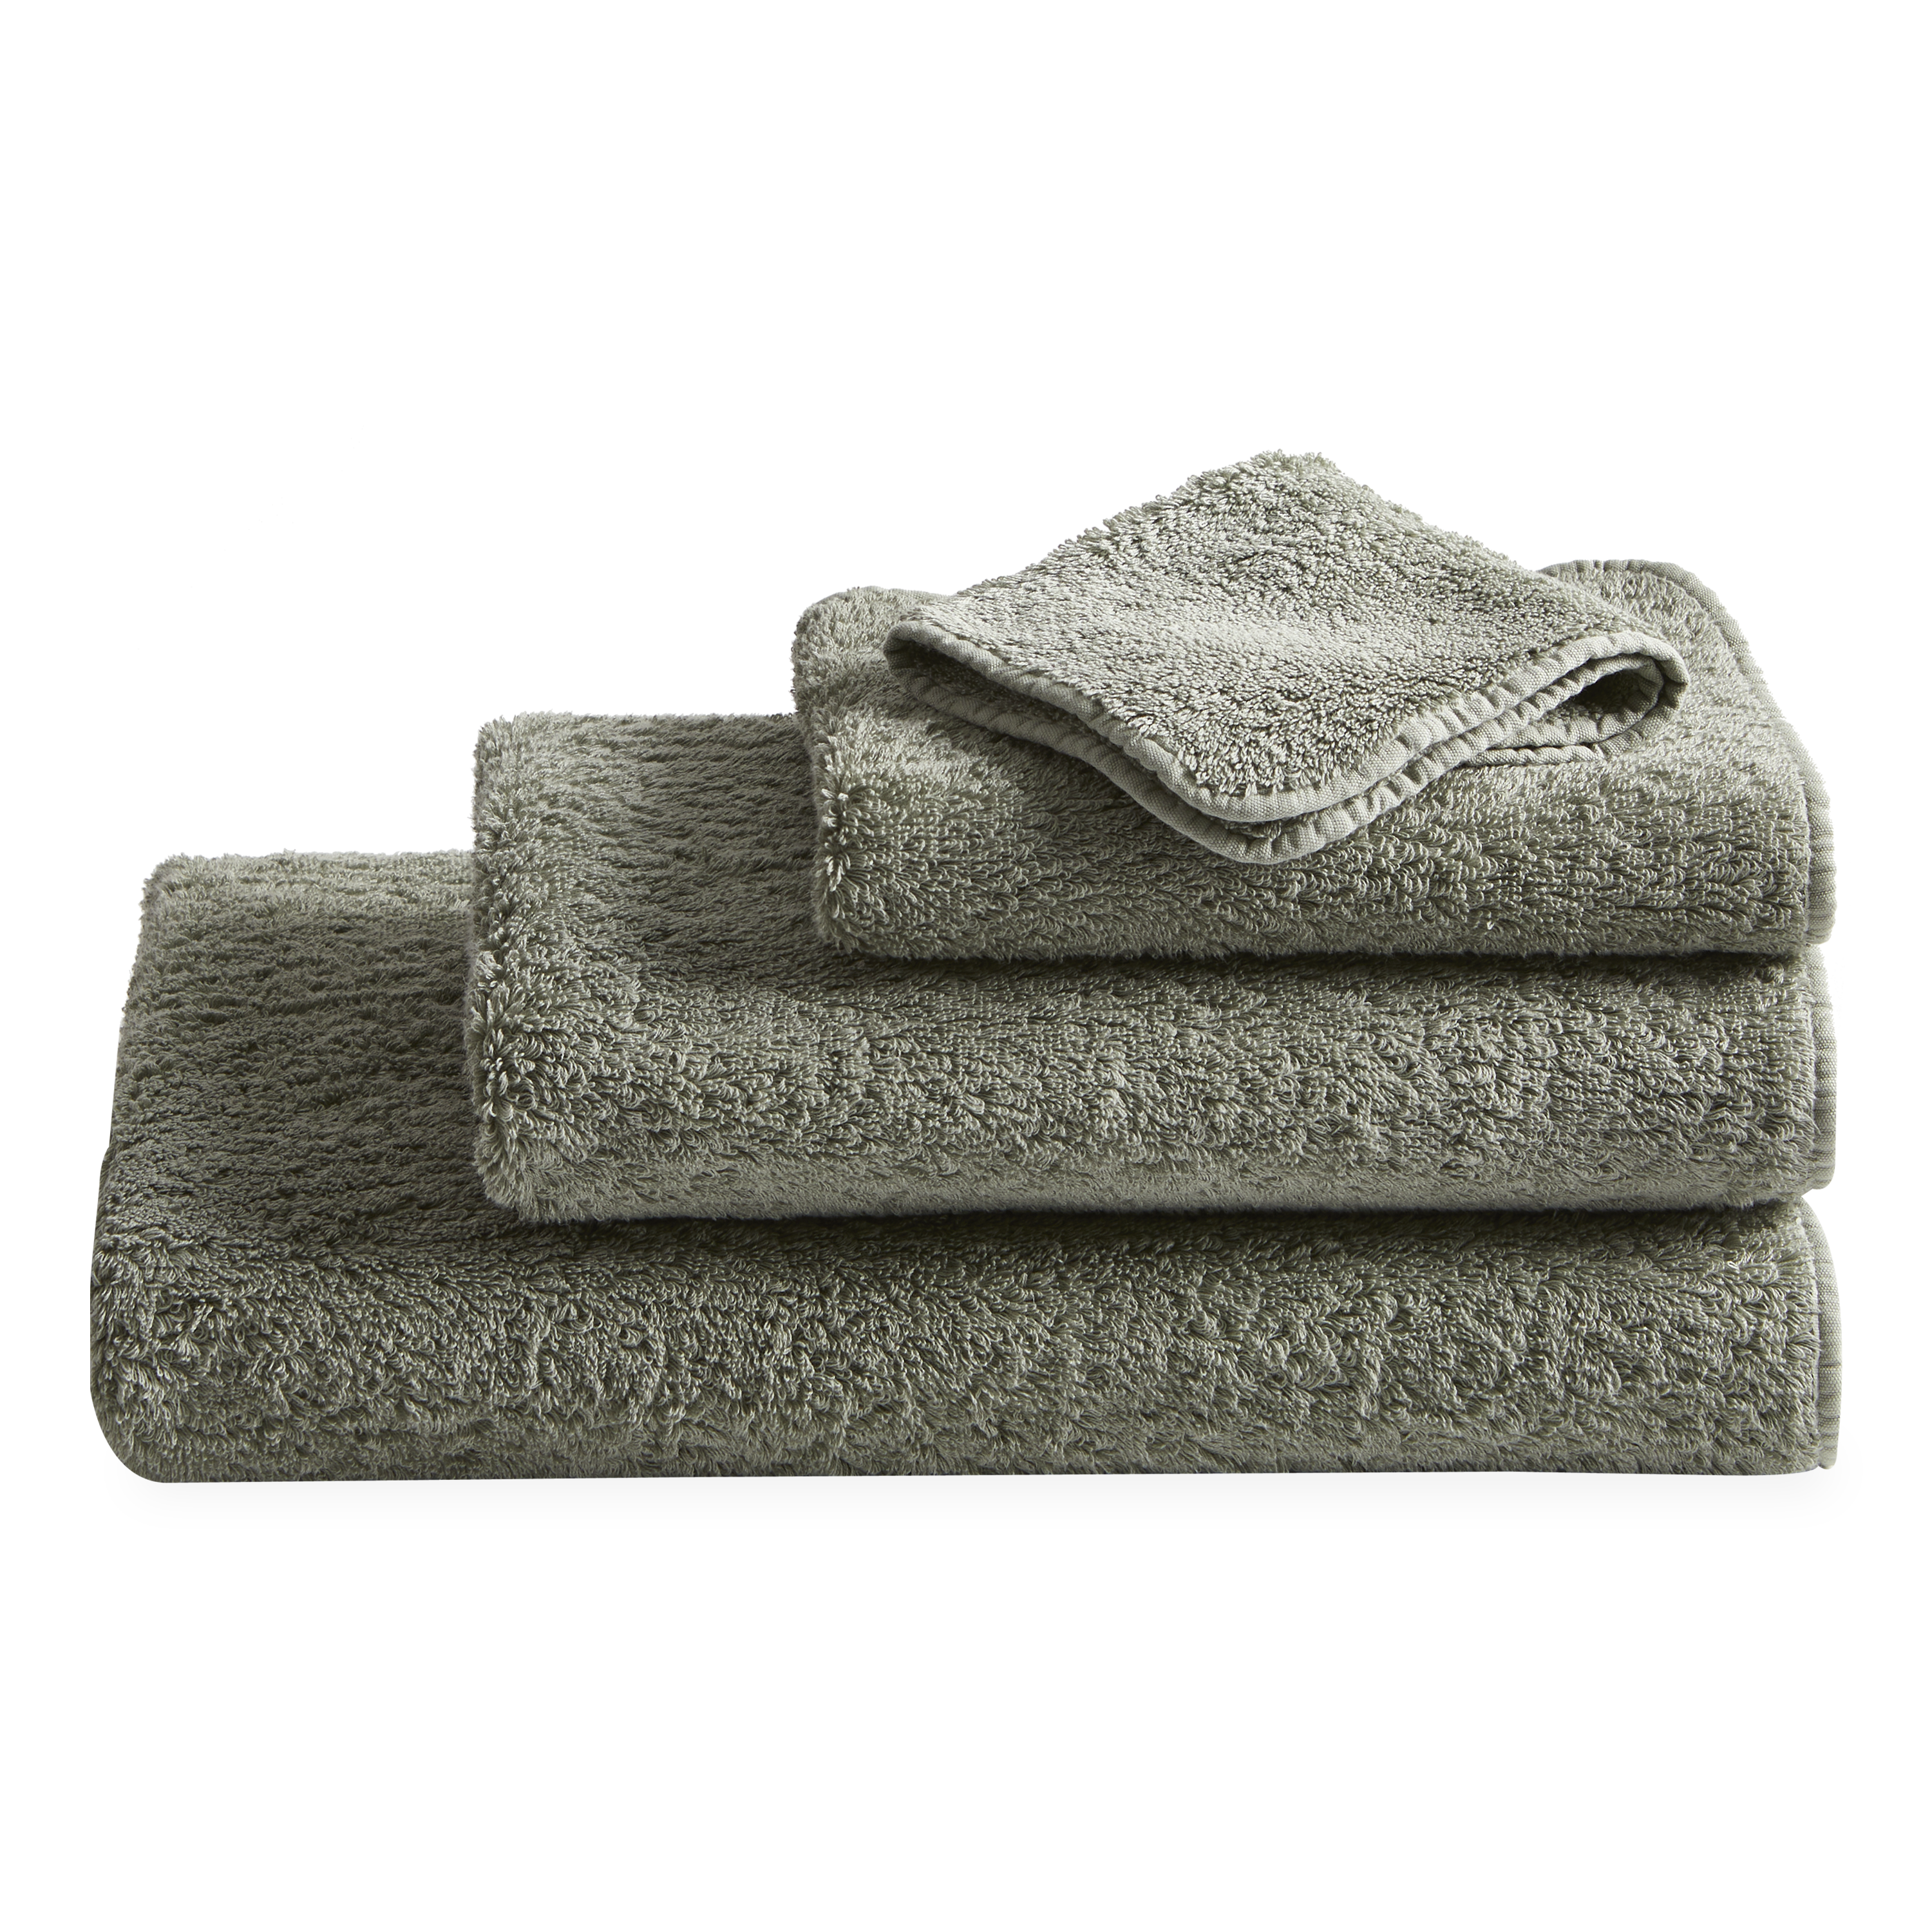 Abyss Super Pile Bath Towels (28 x 54